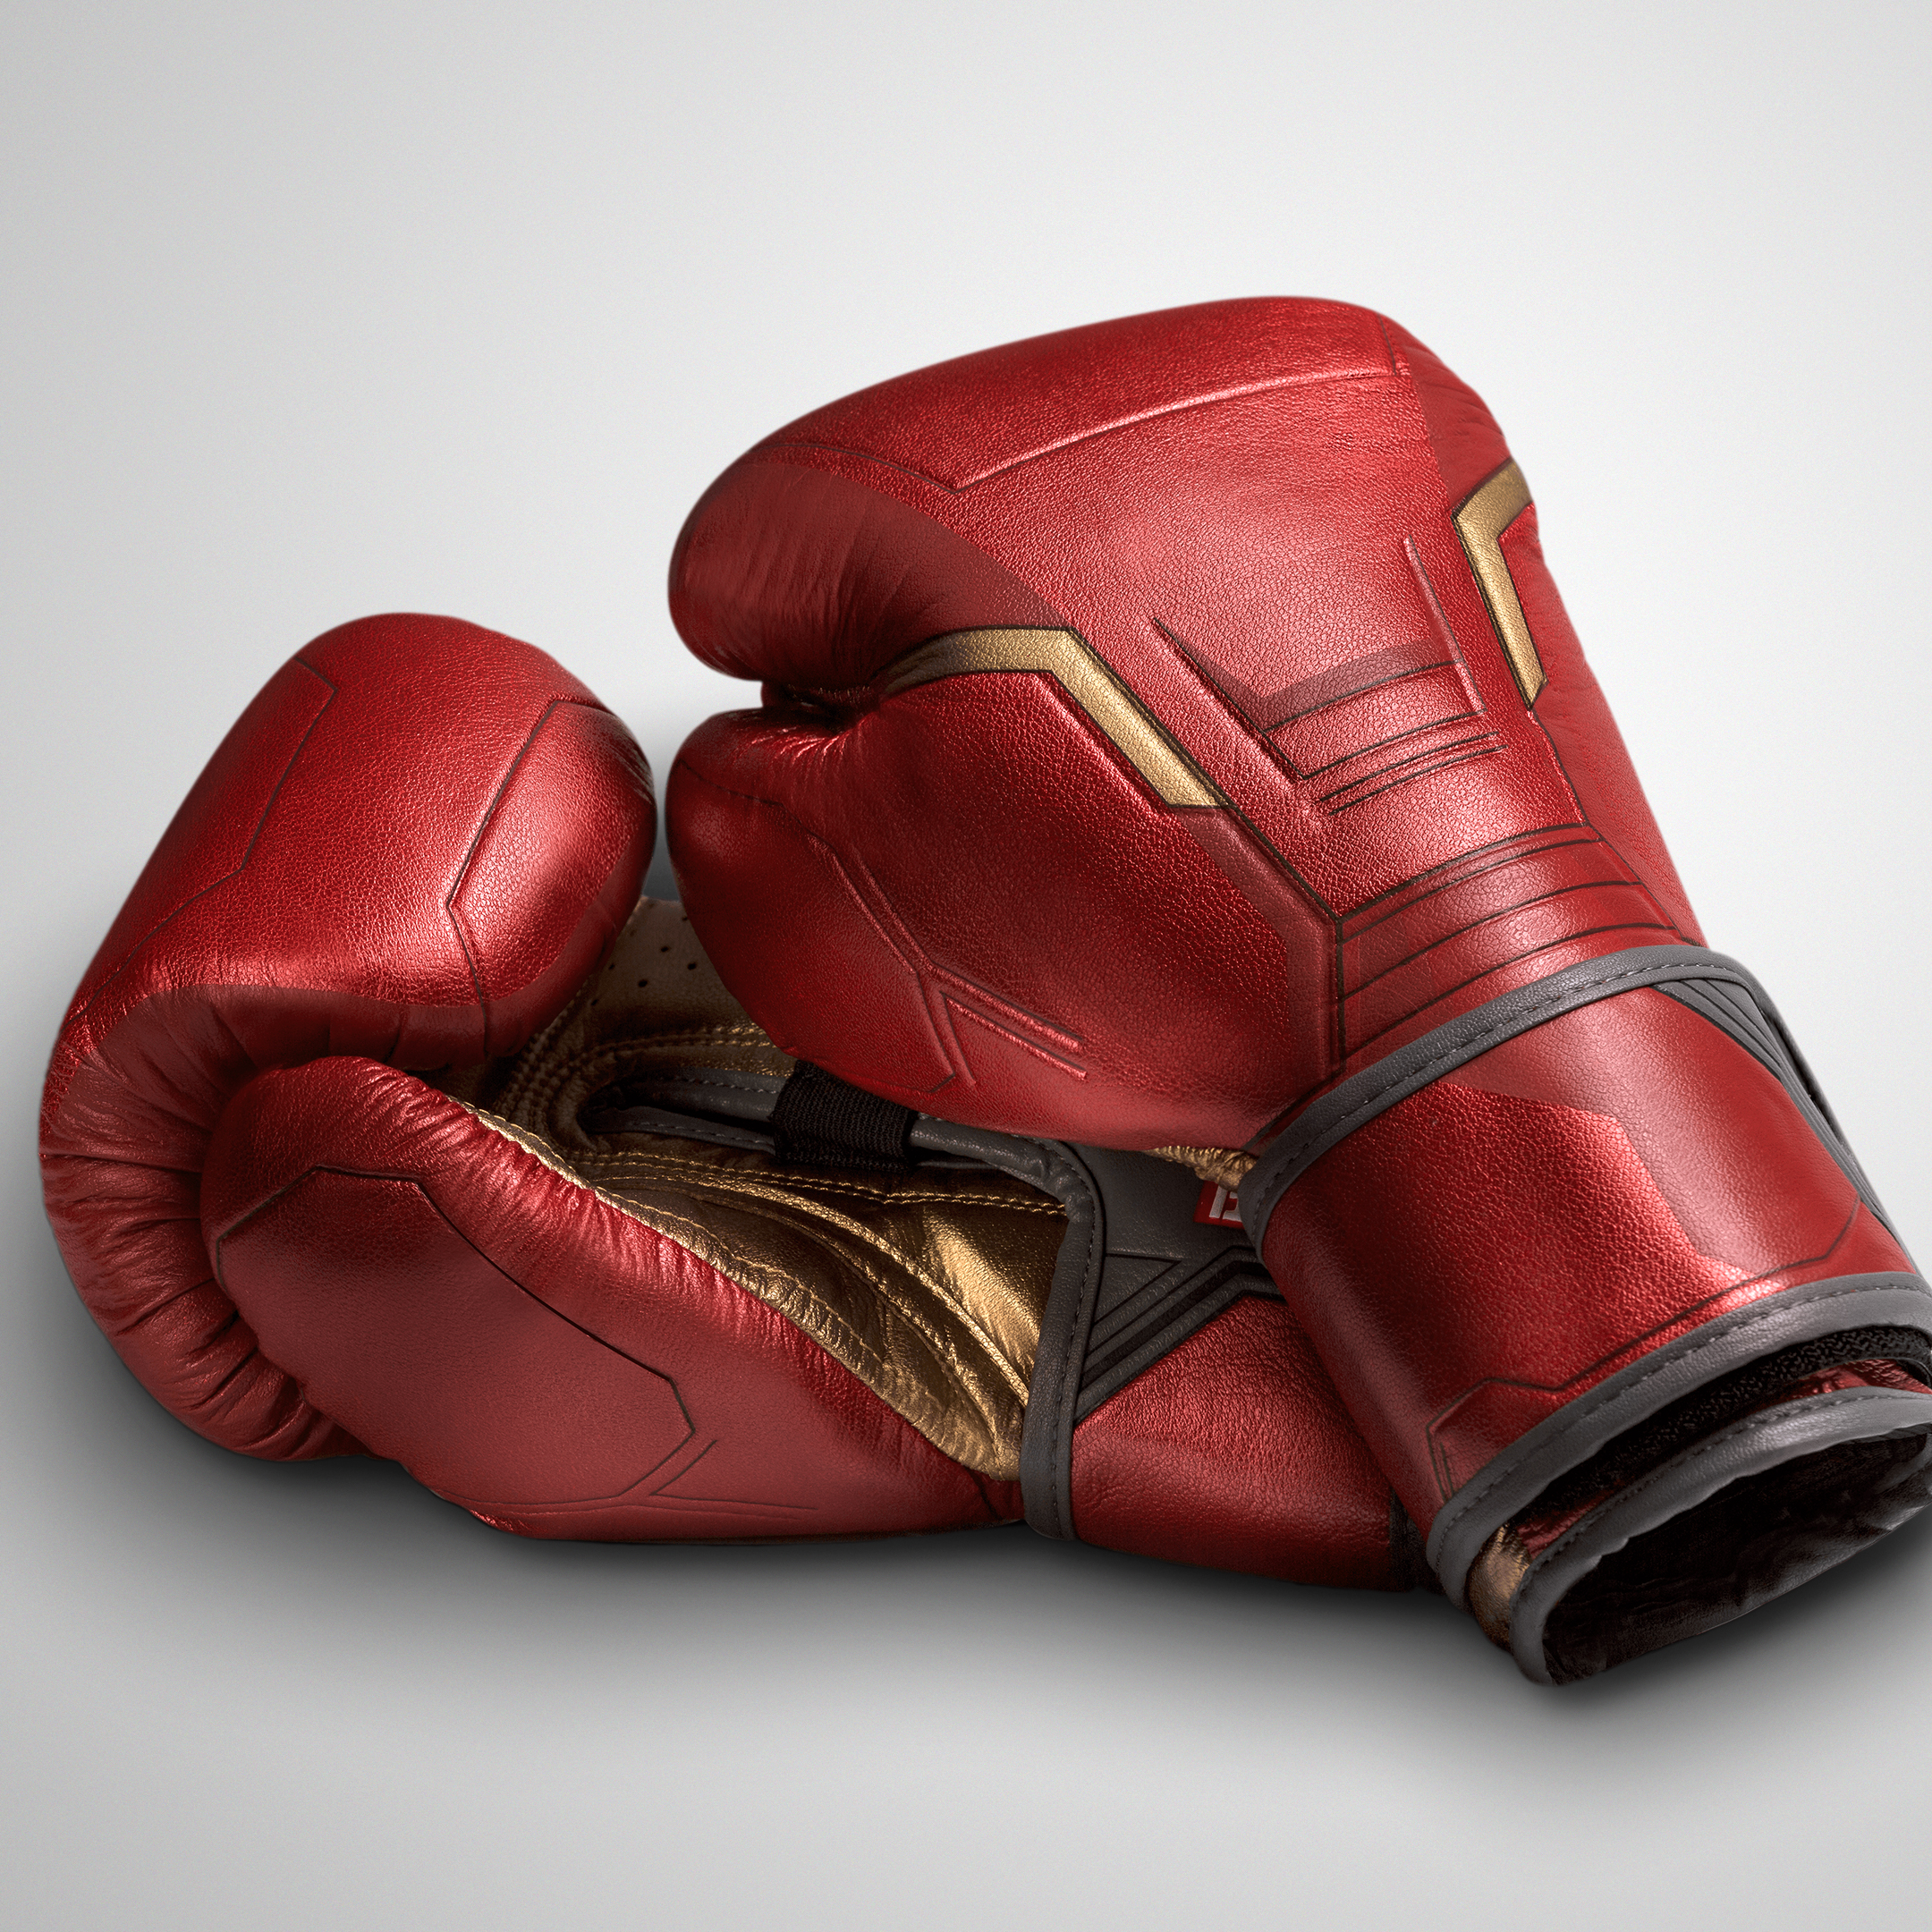 Iron man boxing glove